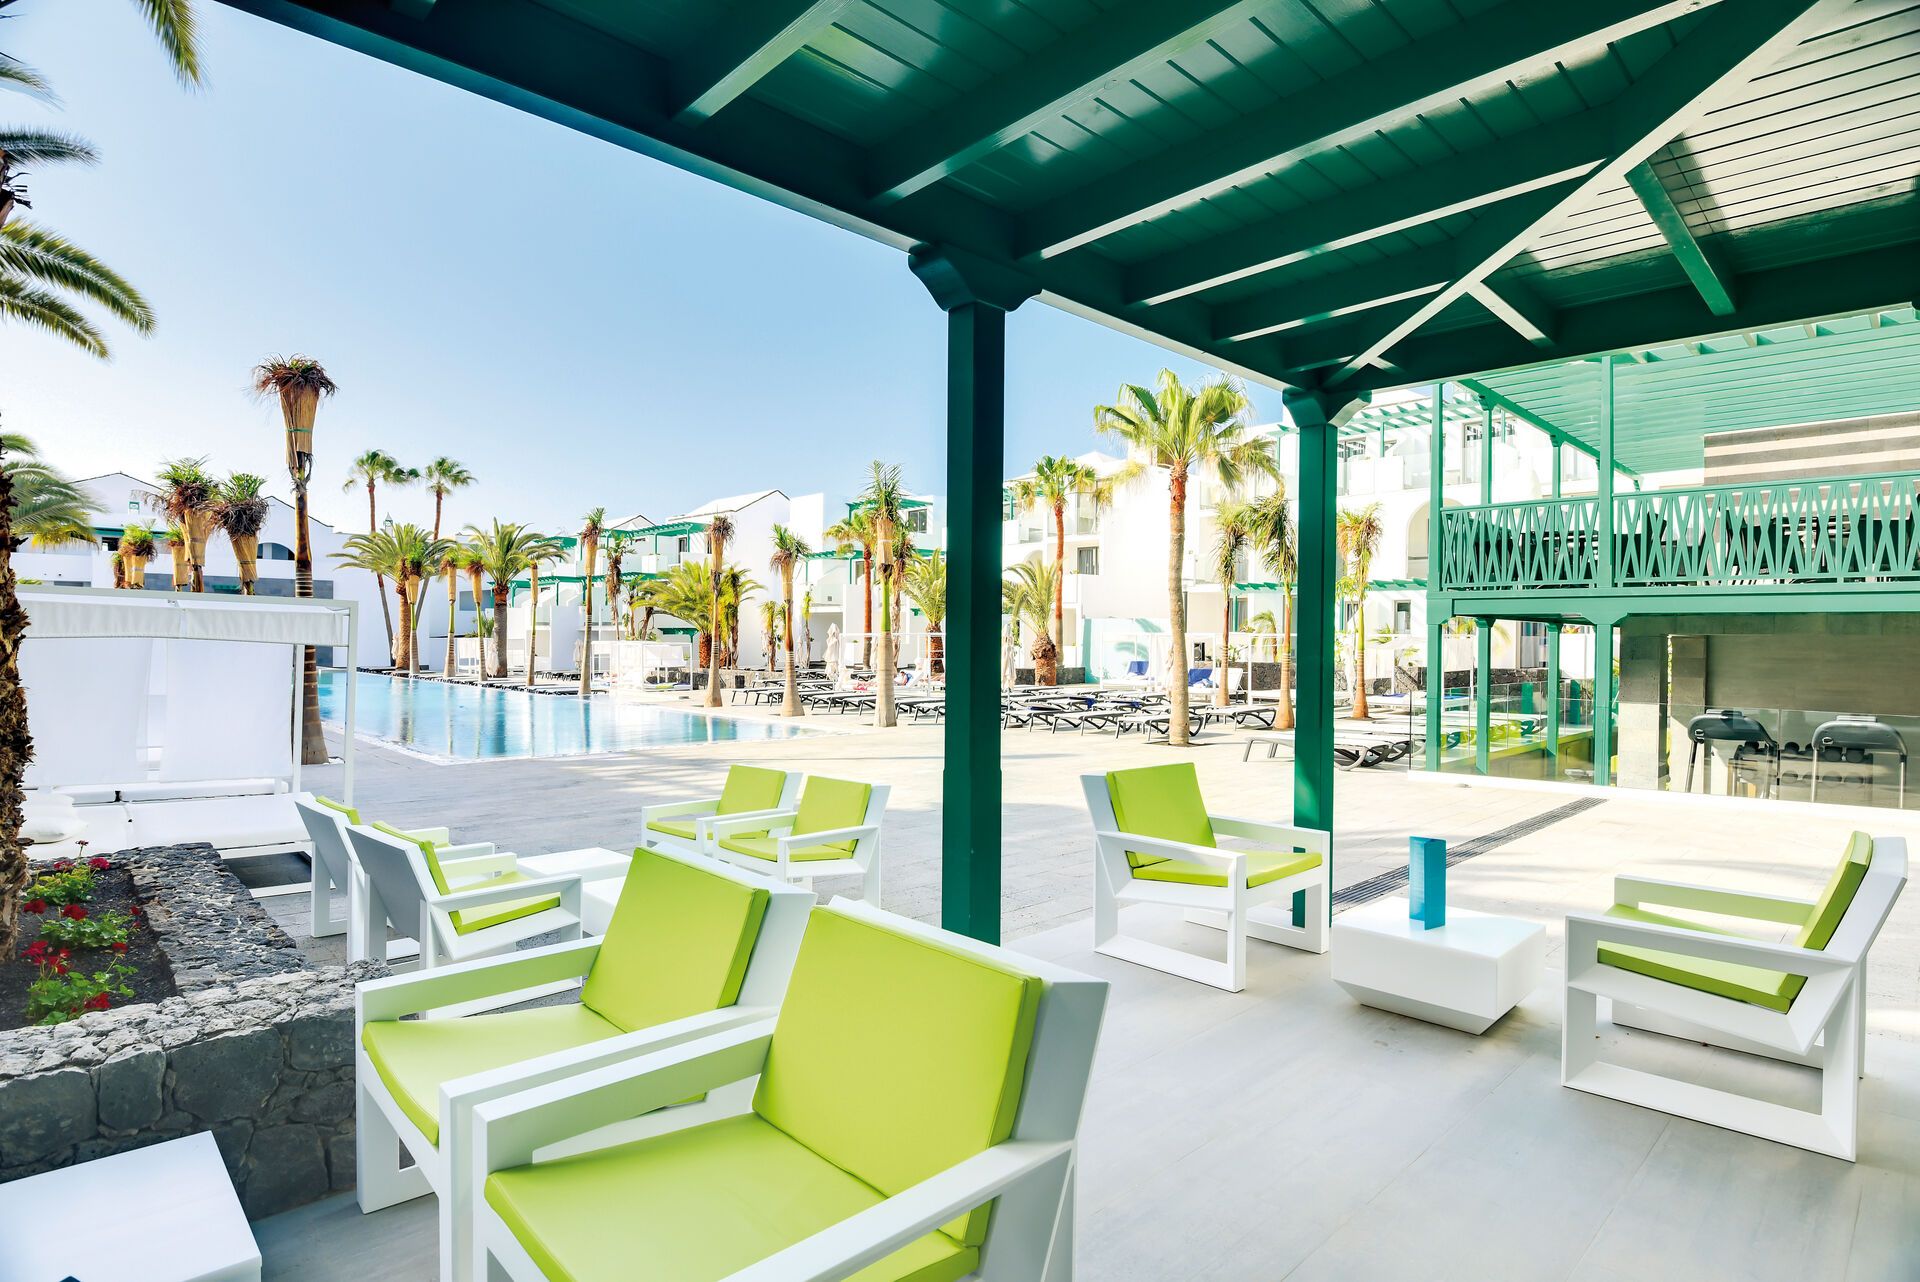 Canaries - Lanzarote - Espagne - Hôtel Barceló Teguise Beach - Adults only 4*